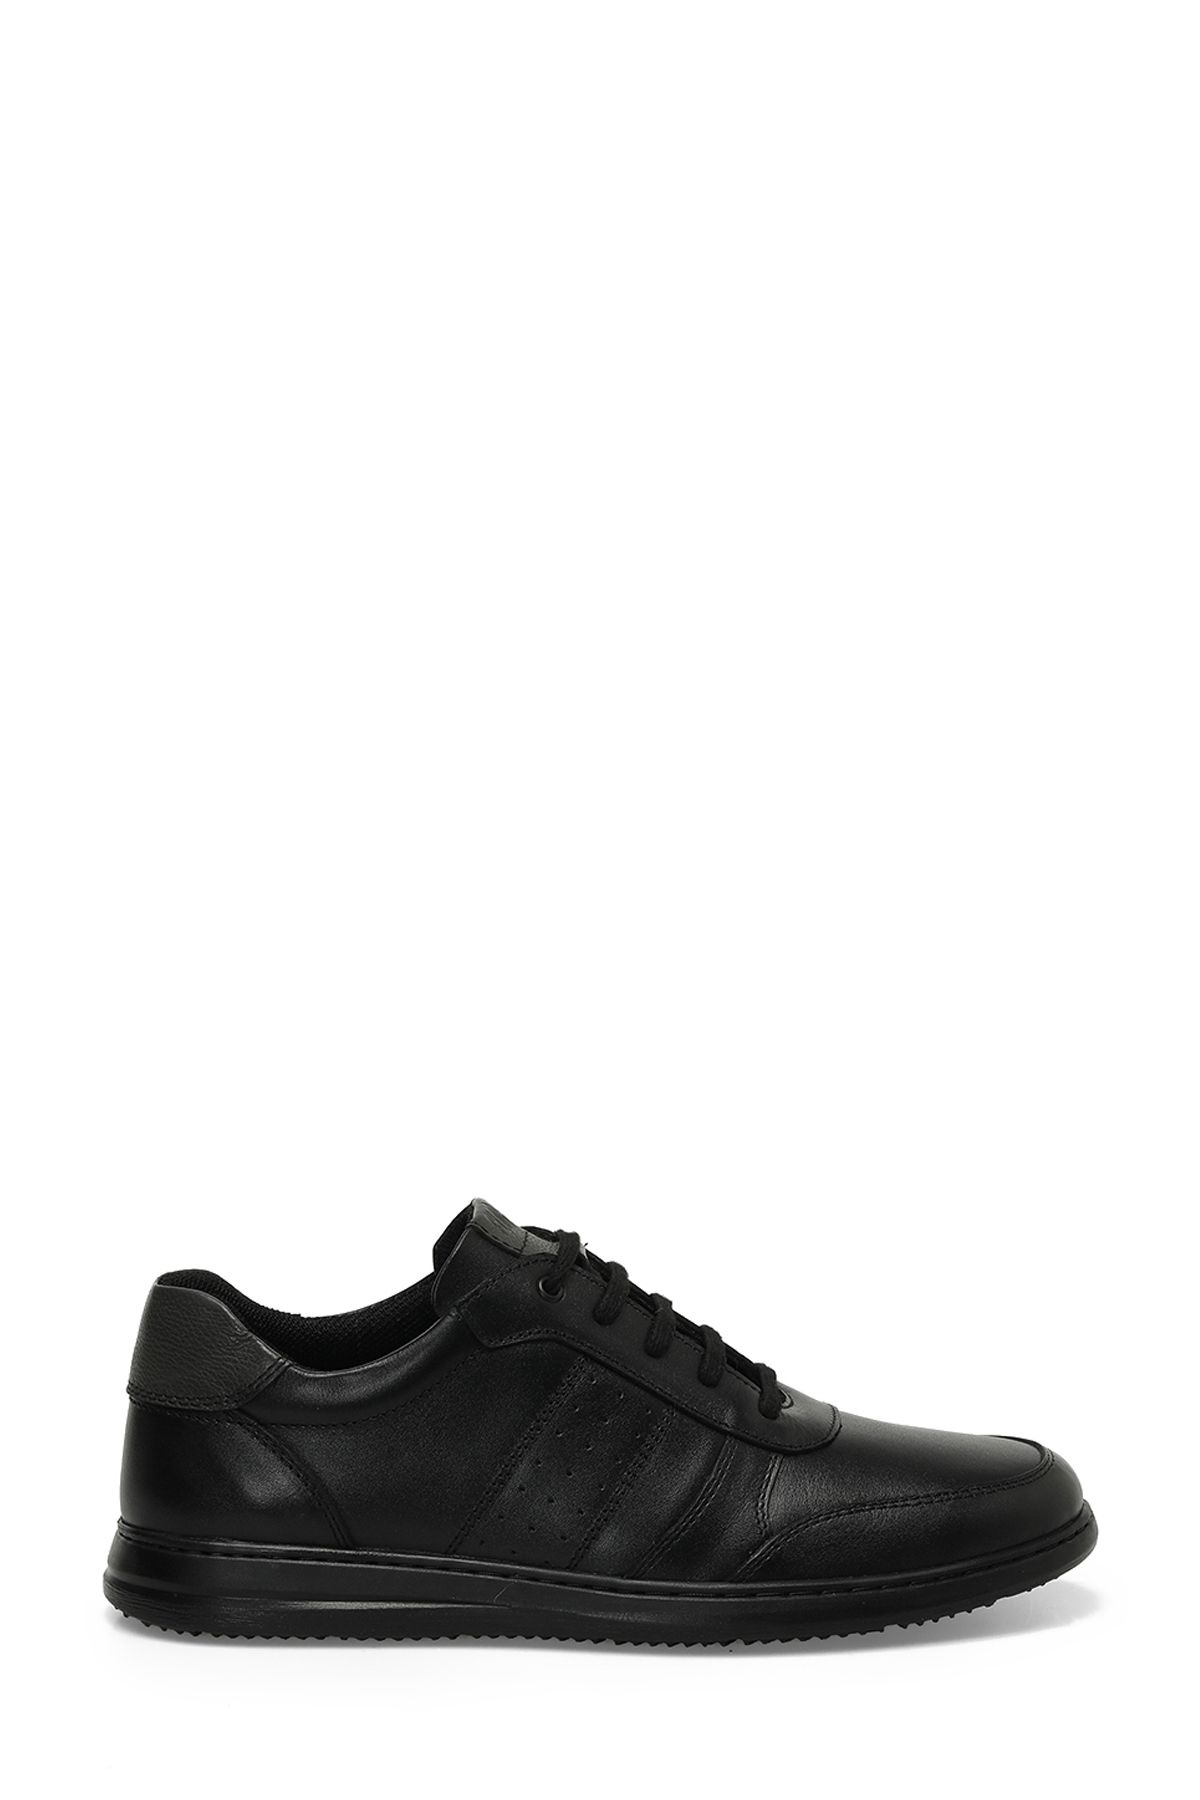 Flogart HERN 4FX Siyah Erkek Comfort Ayakkabı